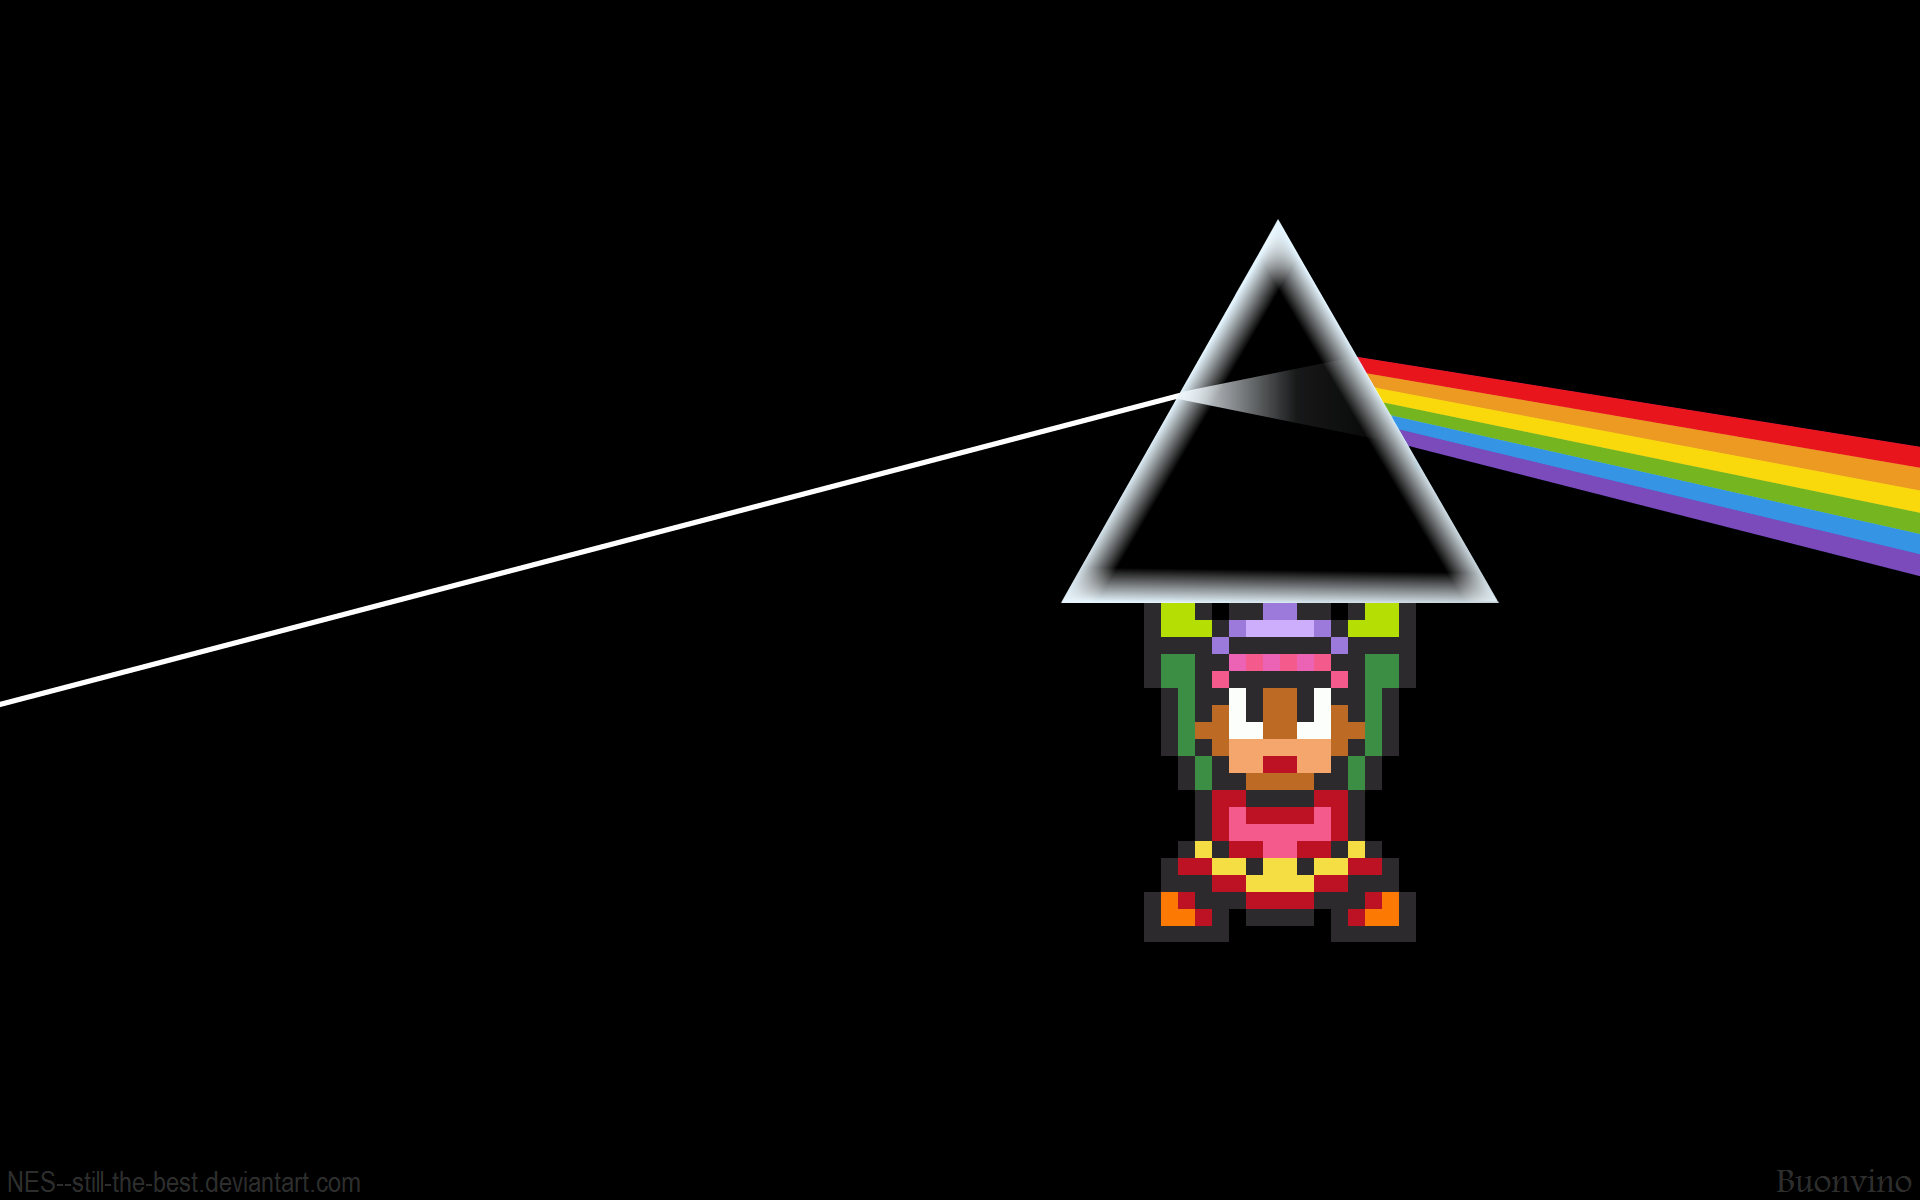 General 1920x1200 The Legend of Zelda Link pixels video games video game characters Nintendo watermarked pyramid rainbows Refraction Pink Floyd black background standing